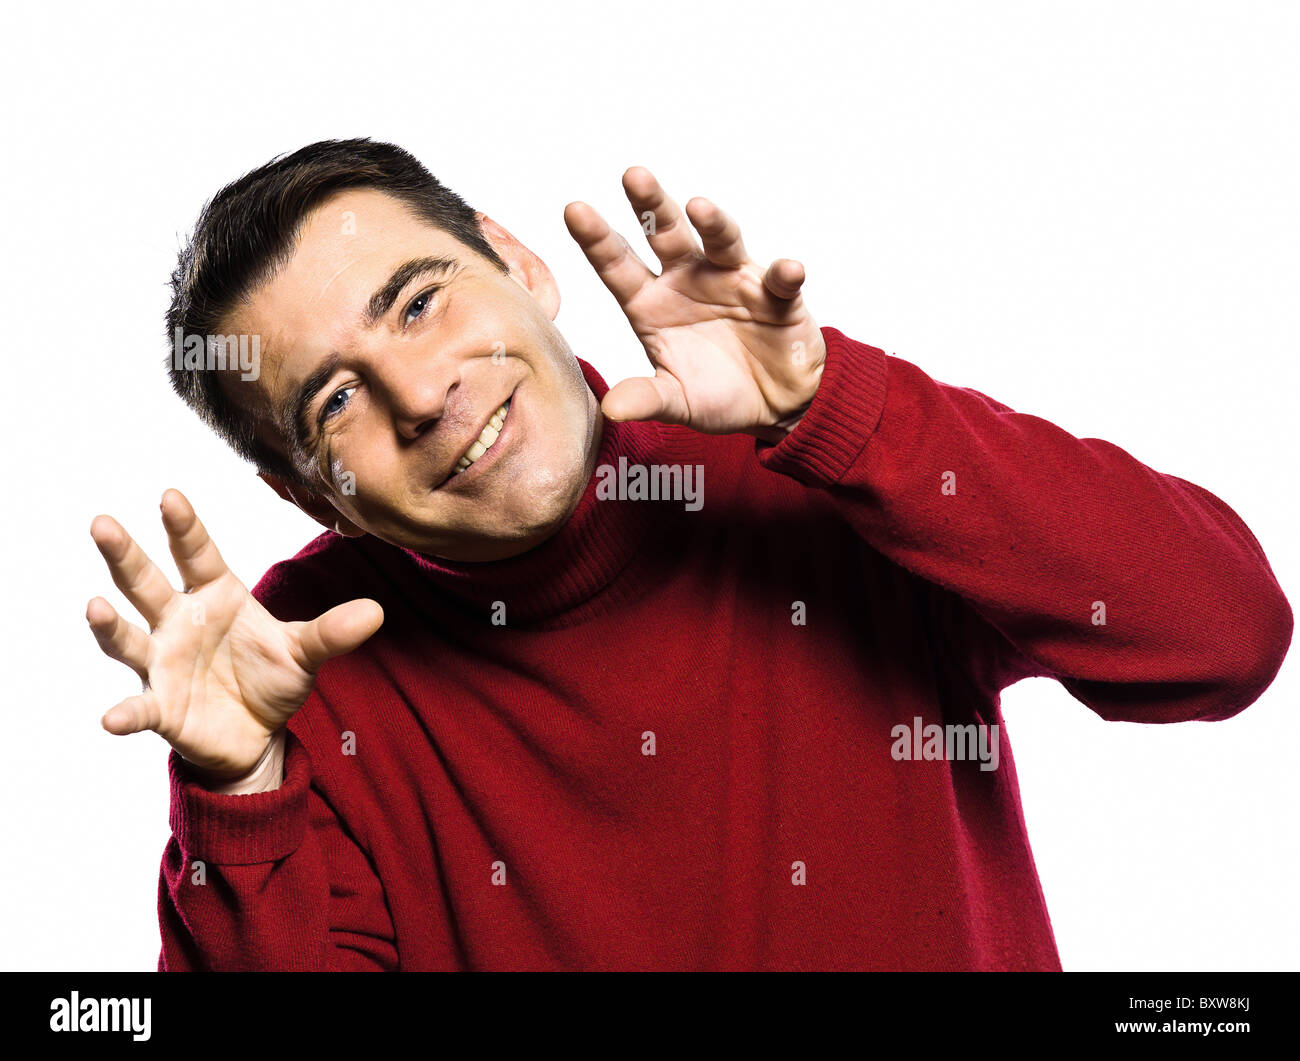 caucasian man  teasing childish  gesture studio portrait on isolated white backgound Stock Photo